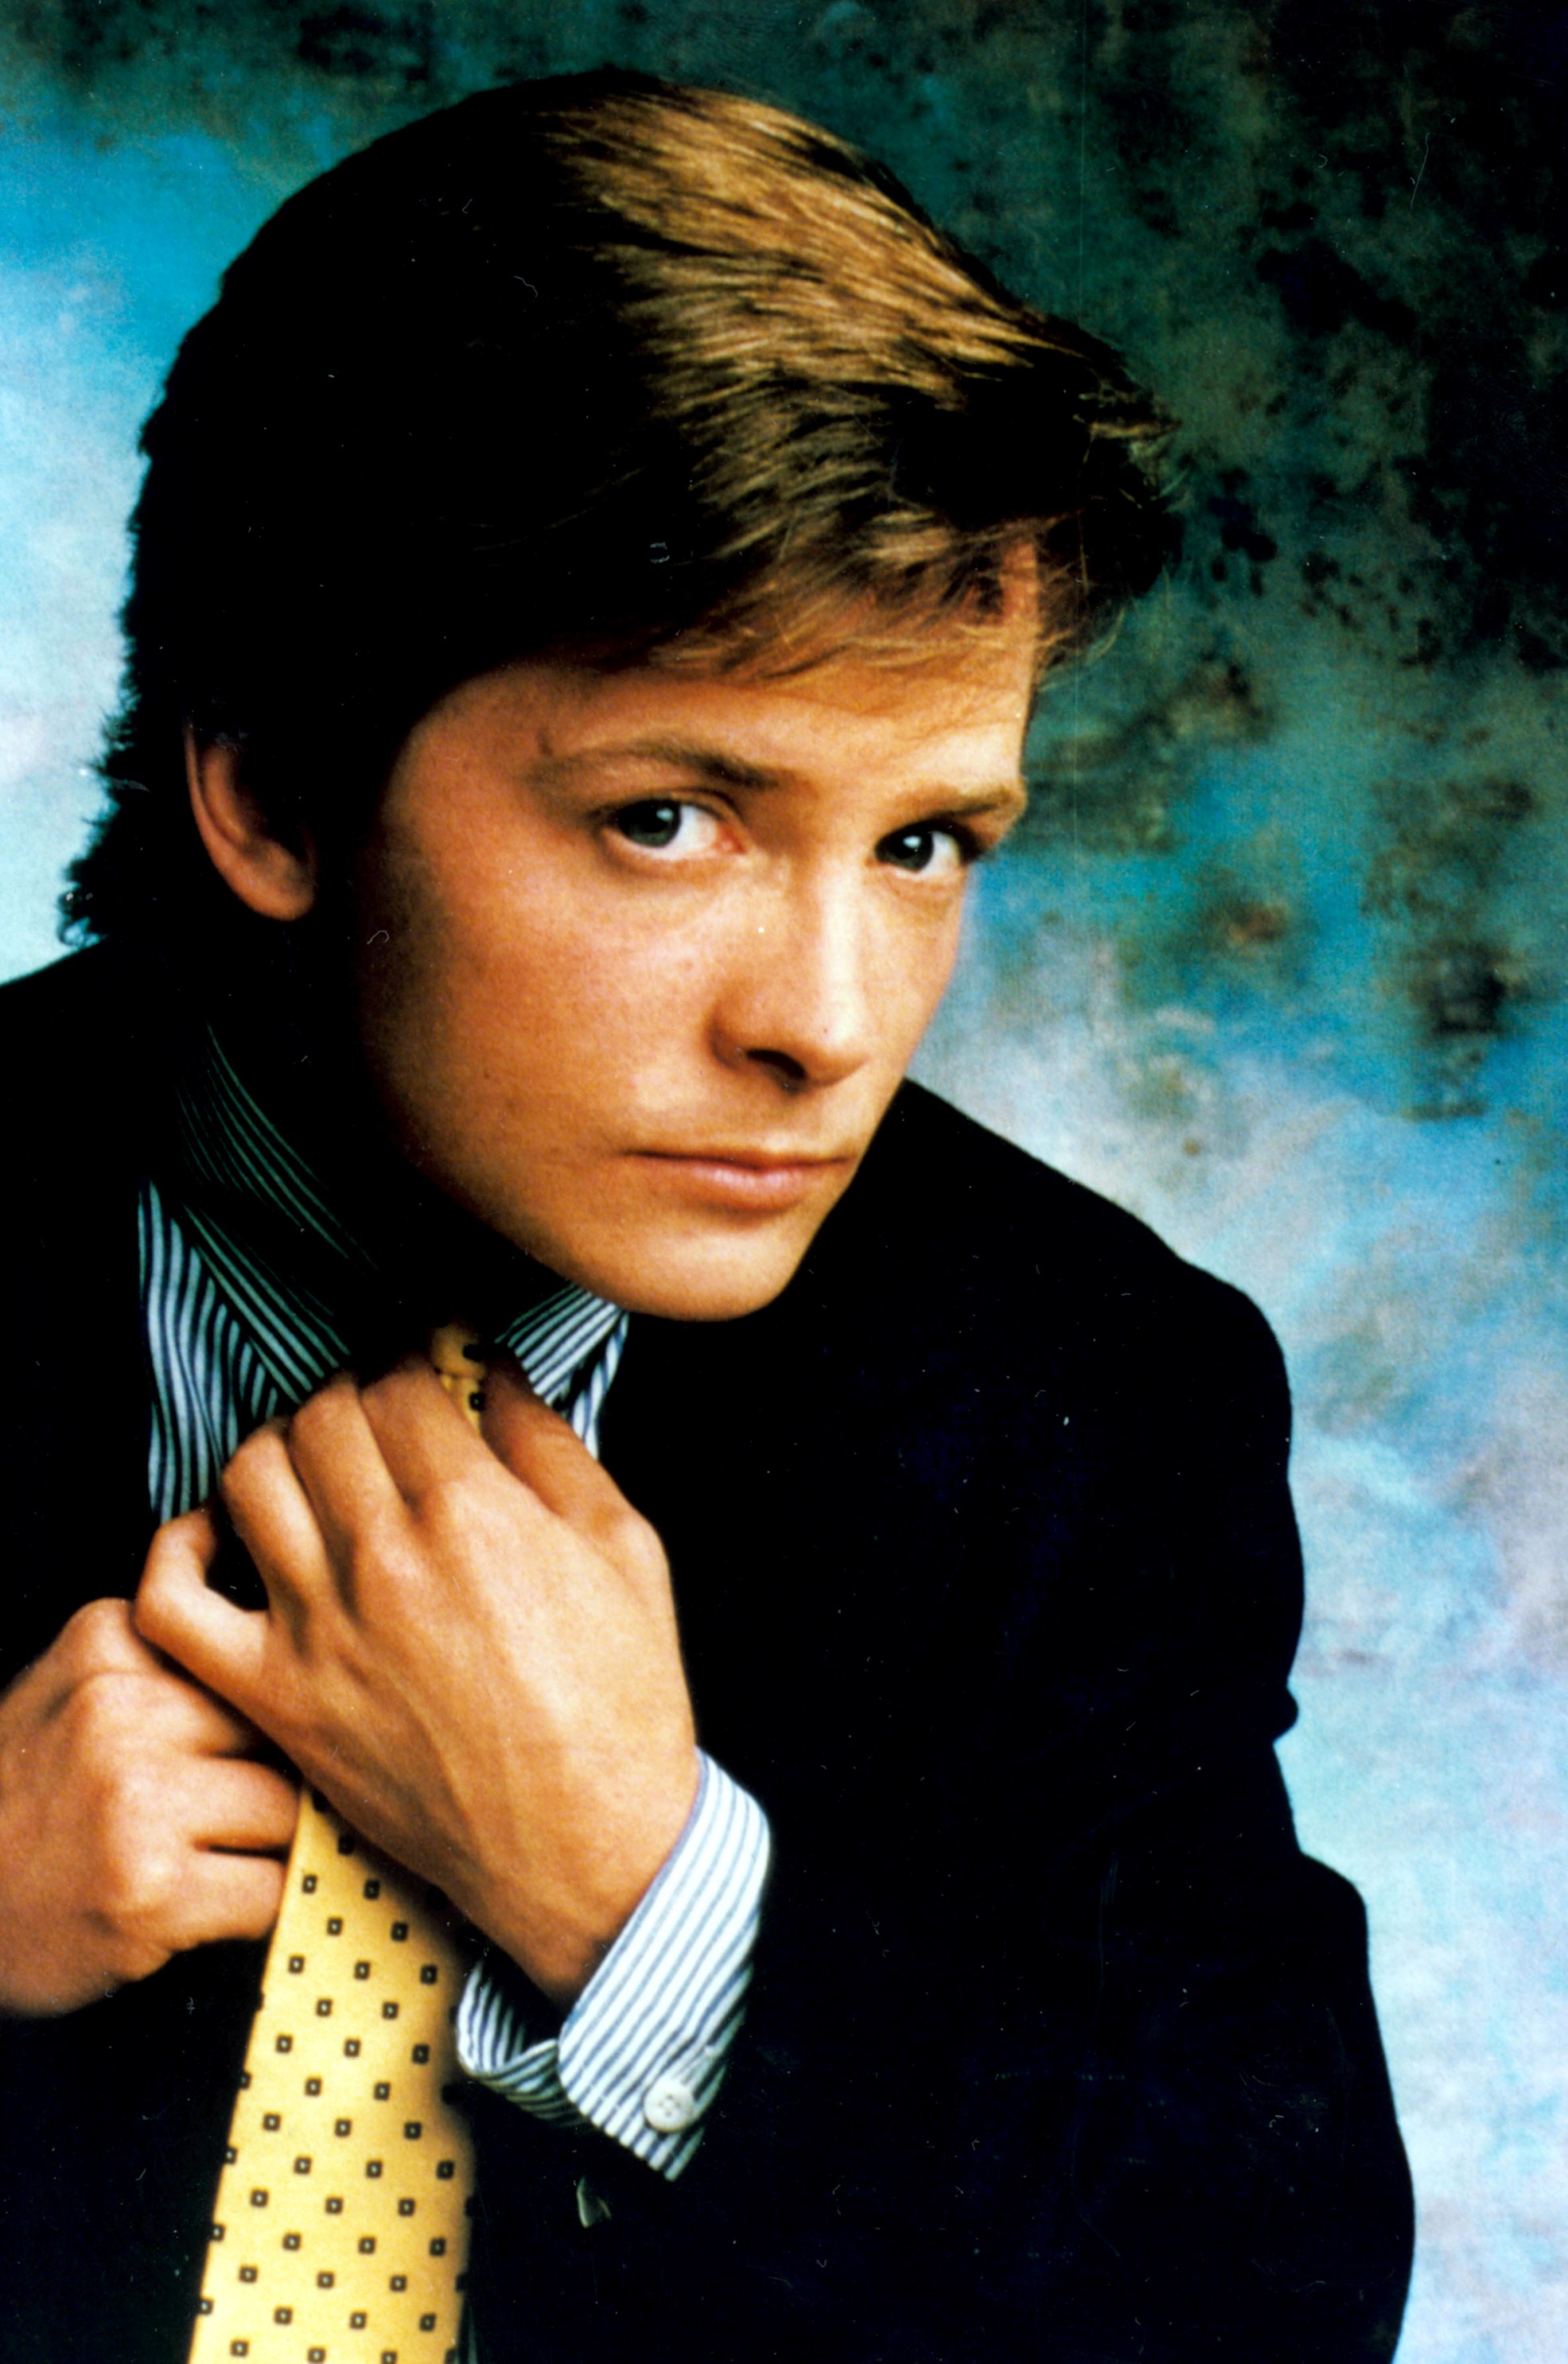 Michael J. Fox photo 7 of 50 pics, wallpaper - photo #198900 - ThePlace21970 x 2970